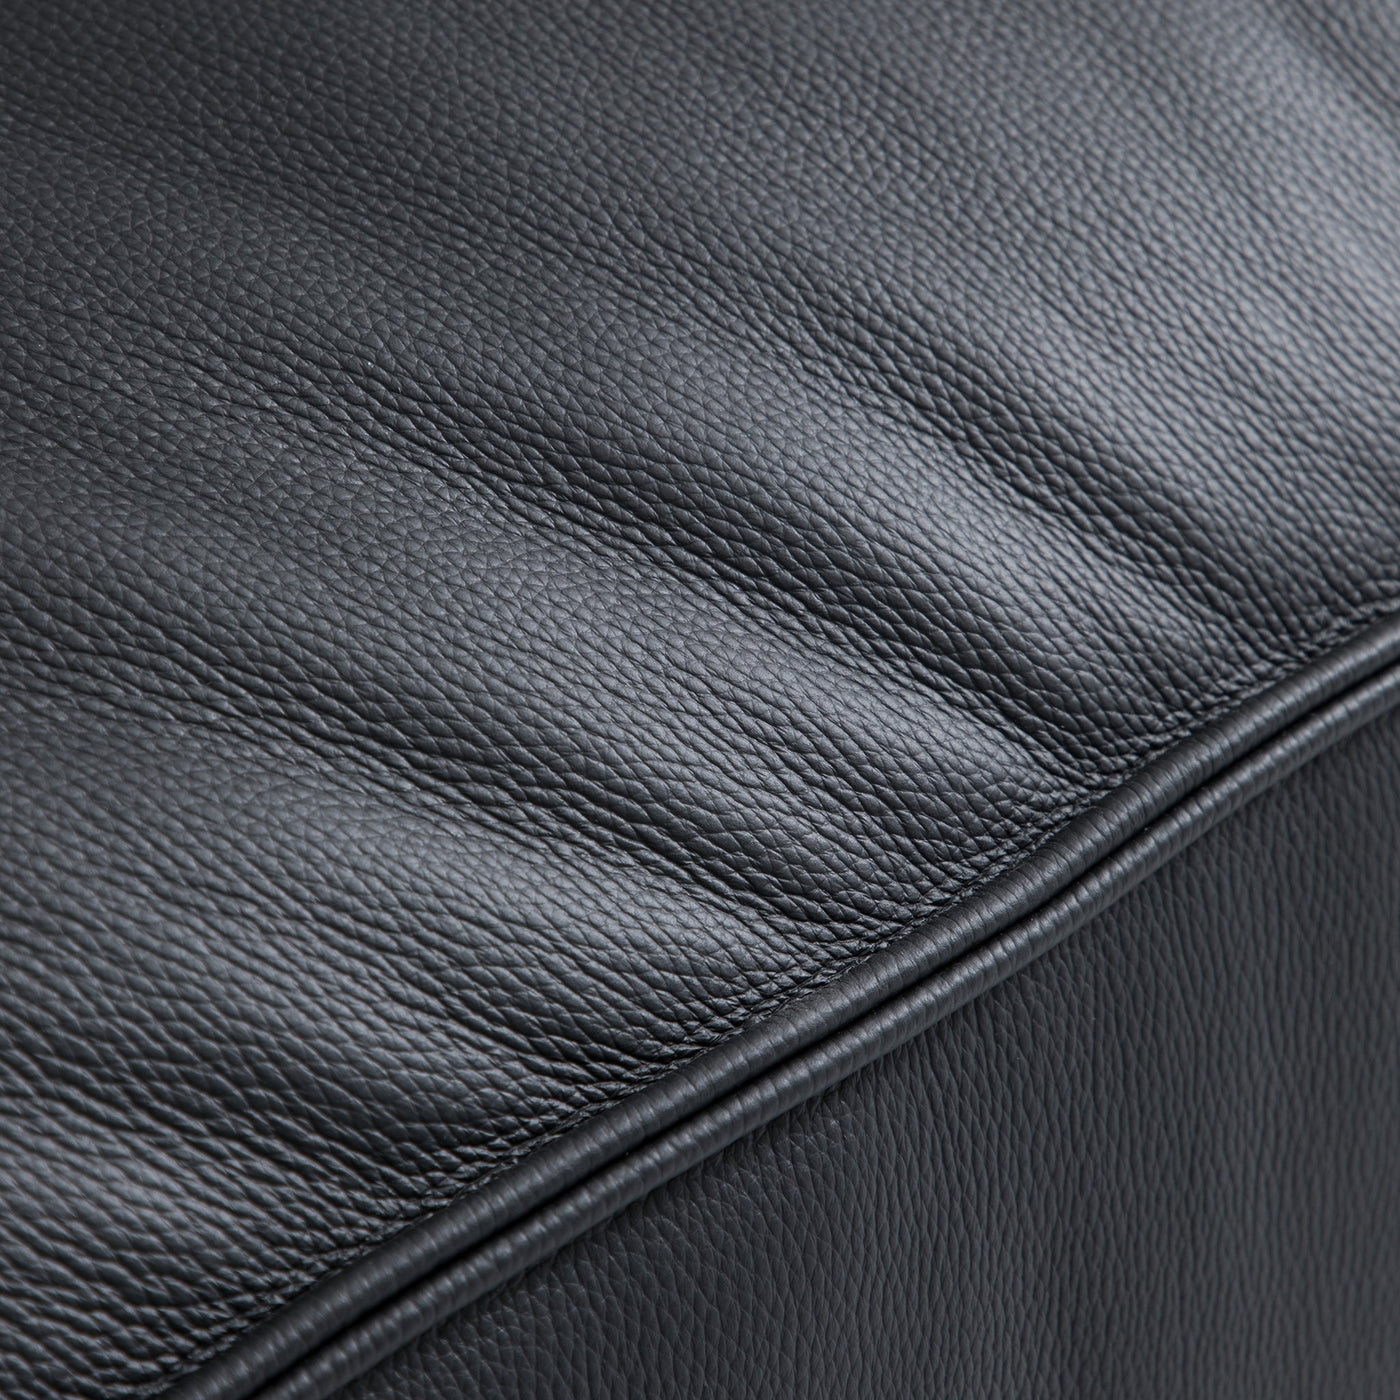 Luxury Minimalist Dark Brown Leather Armchair-Black